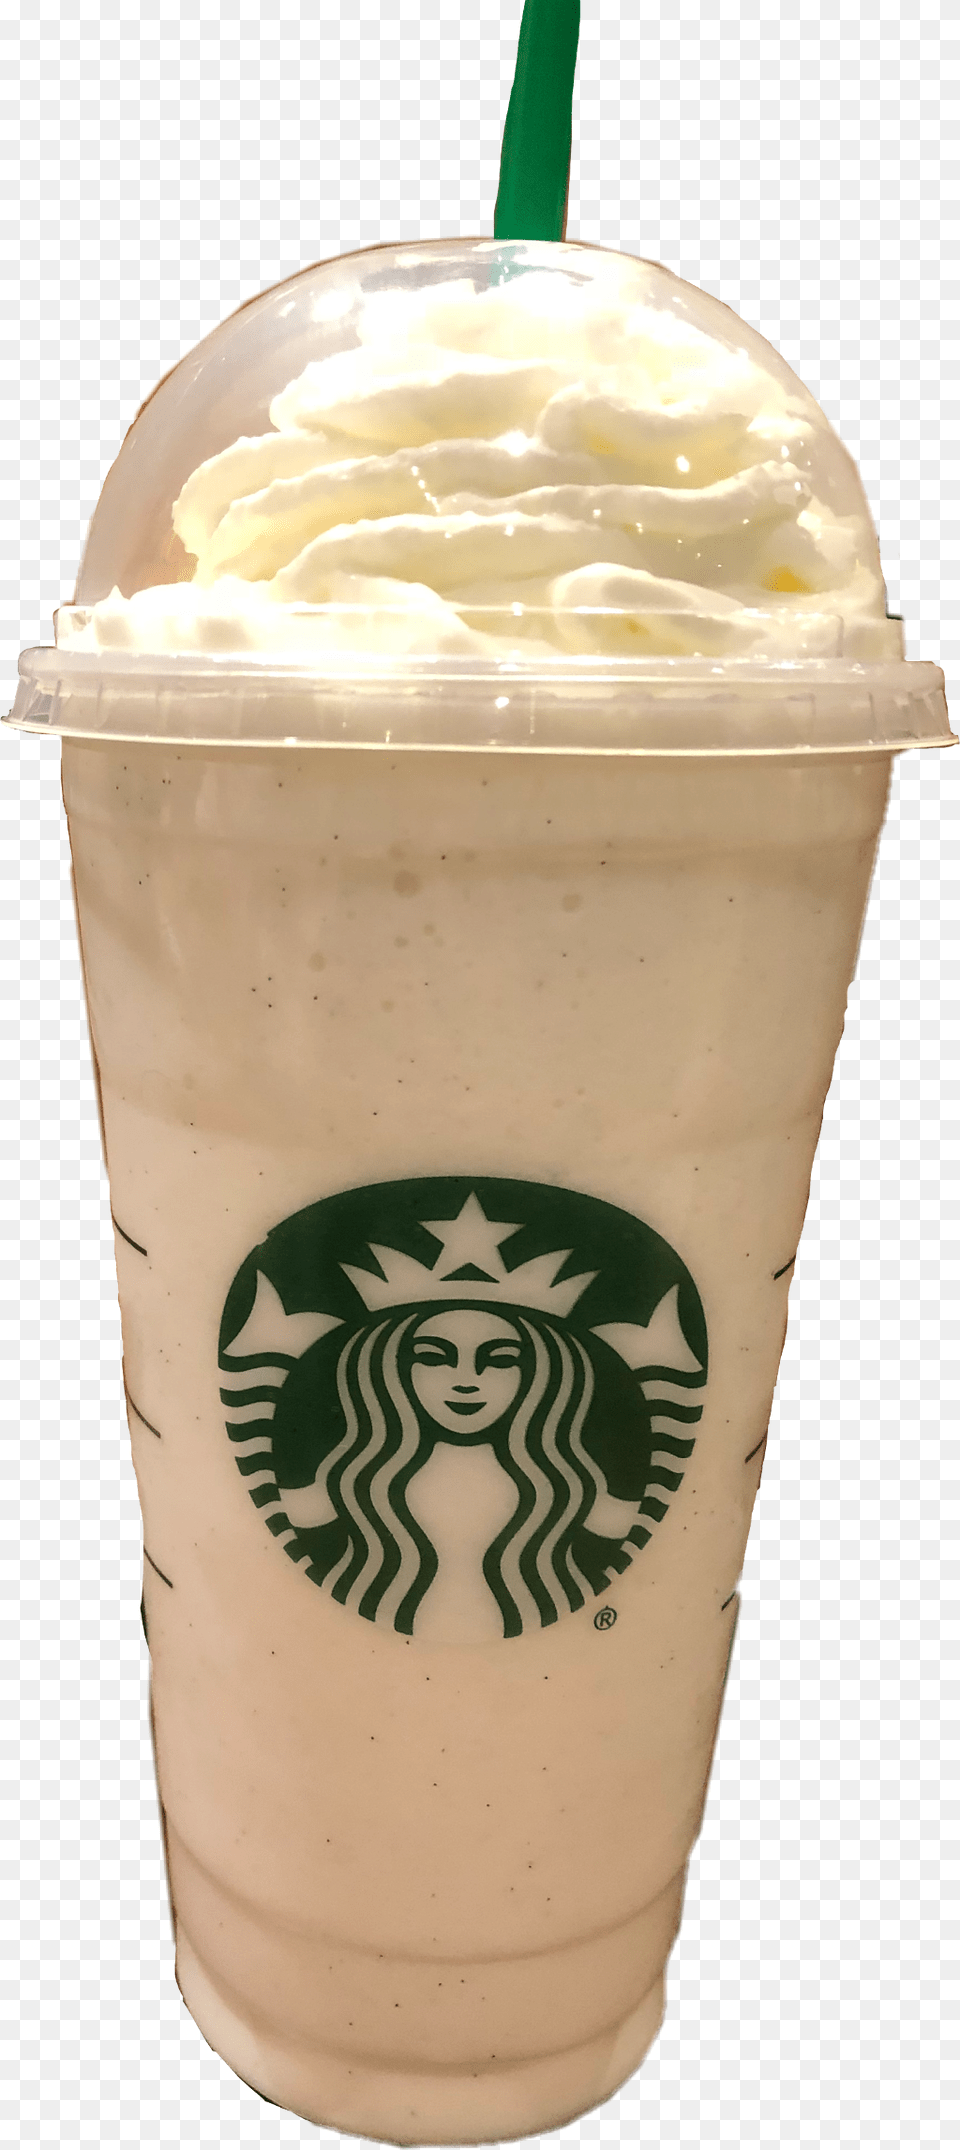 Starbucks New Logo 2011 Download Starbucks Logo 2011, Cream, Dessert, Food, Ice Cream Free Transparent Png